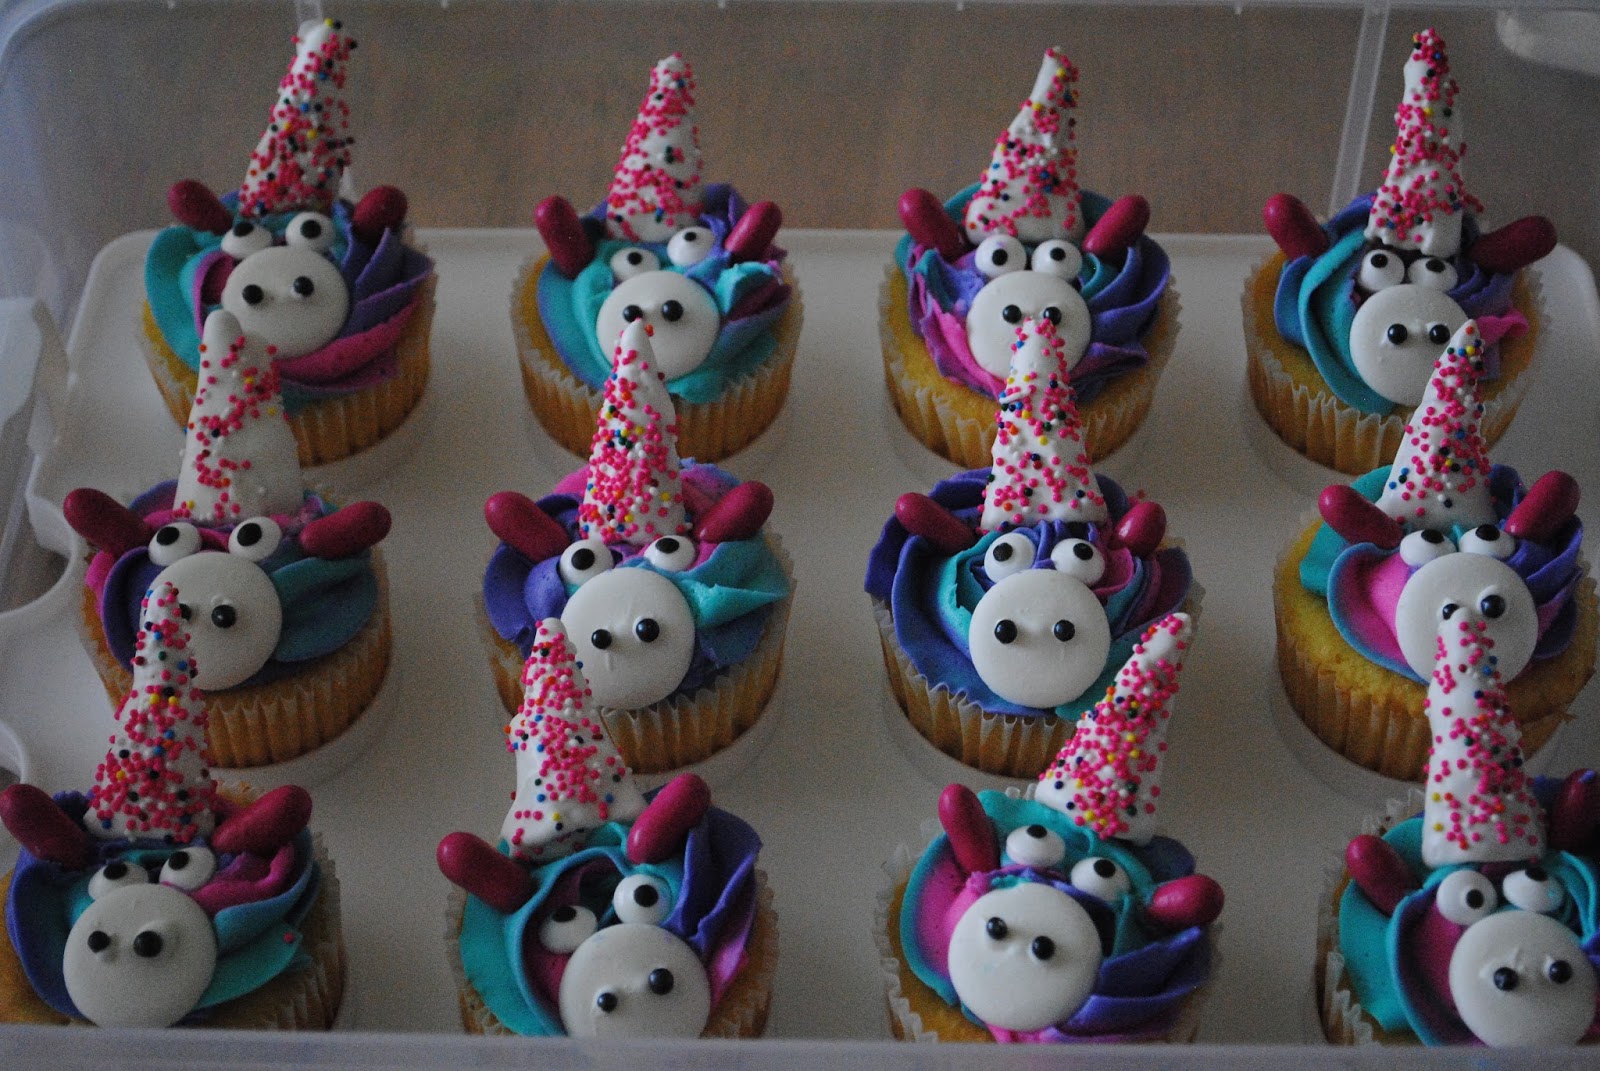 Juli Jacklin's Cupcakes: Unicorn Cupcakes for Maddy's 12th Birthday